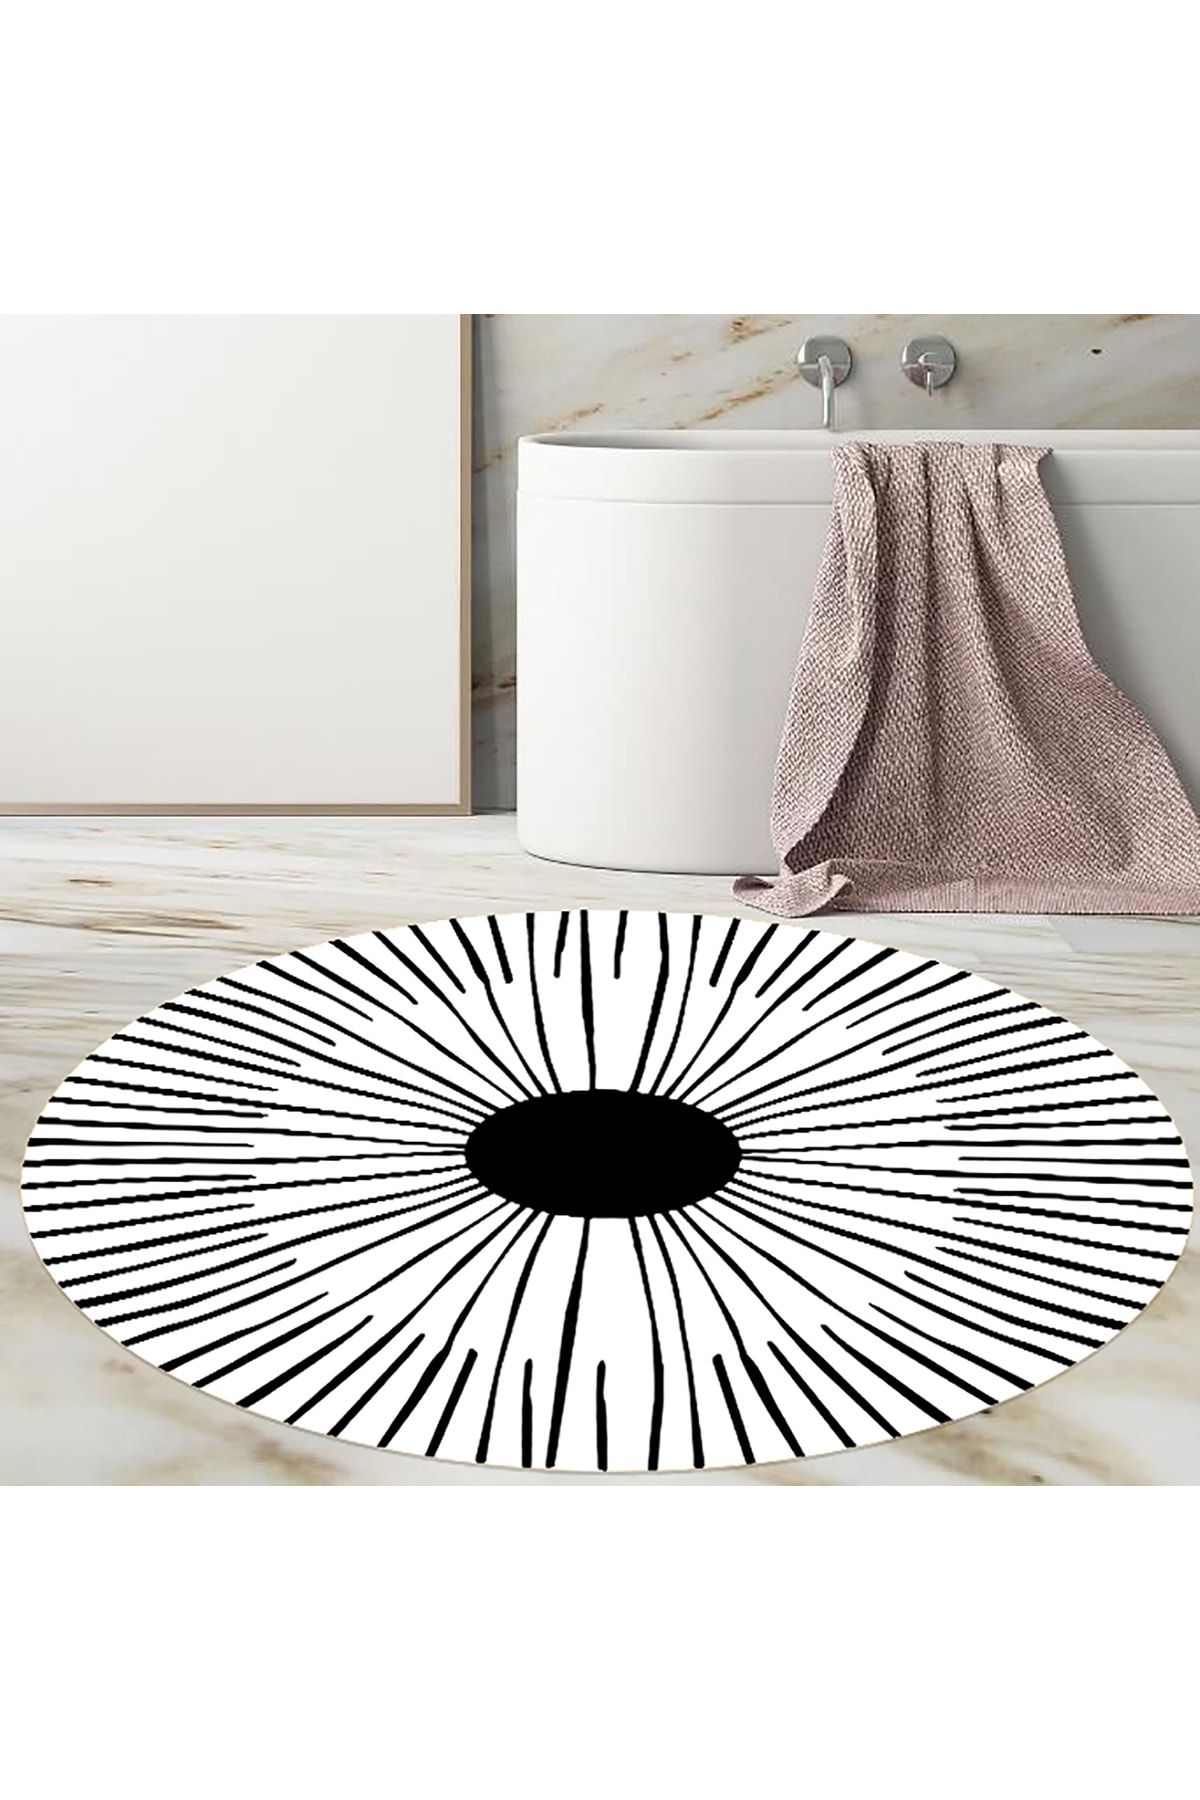 eco concept banyo paspası, siyah beyaz, banyo paspas yuvarlak, kaymaz taban halı, yıkanabilir, 80cmx80cm,